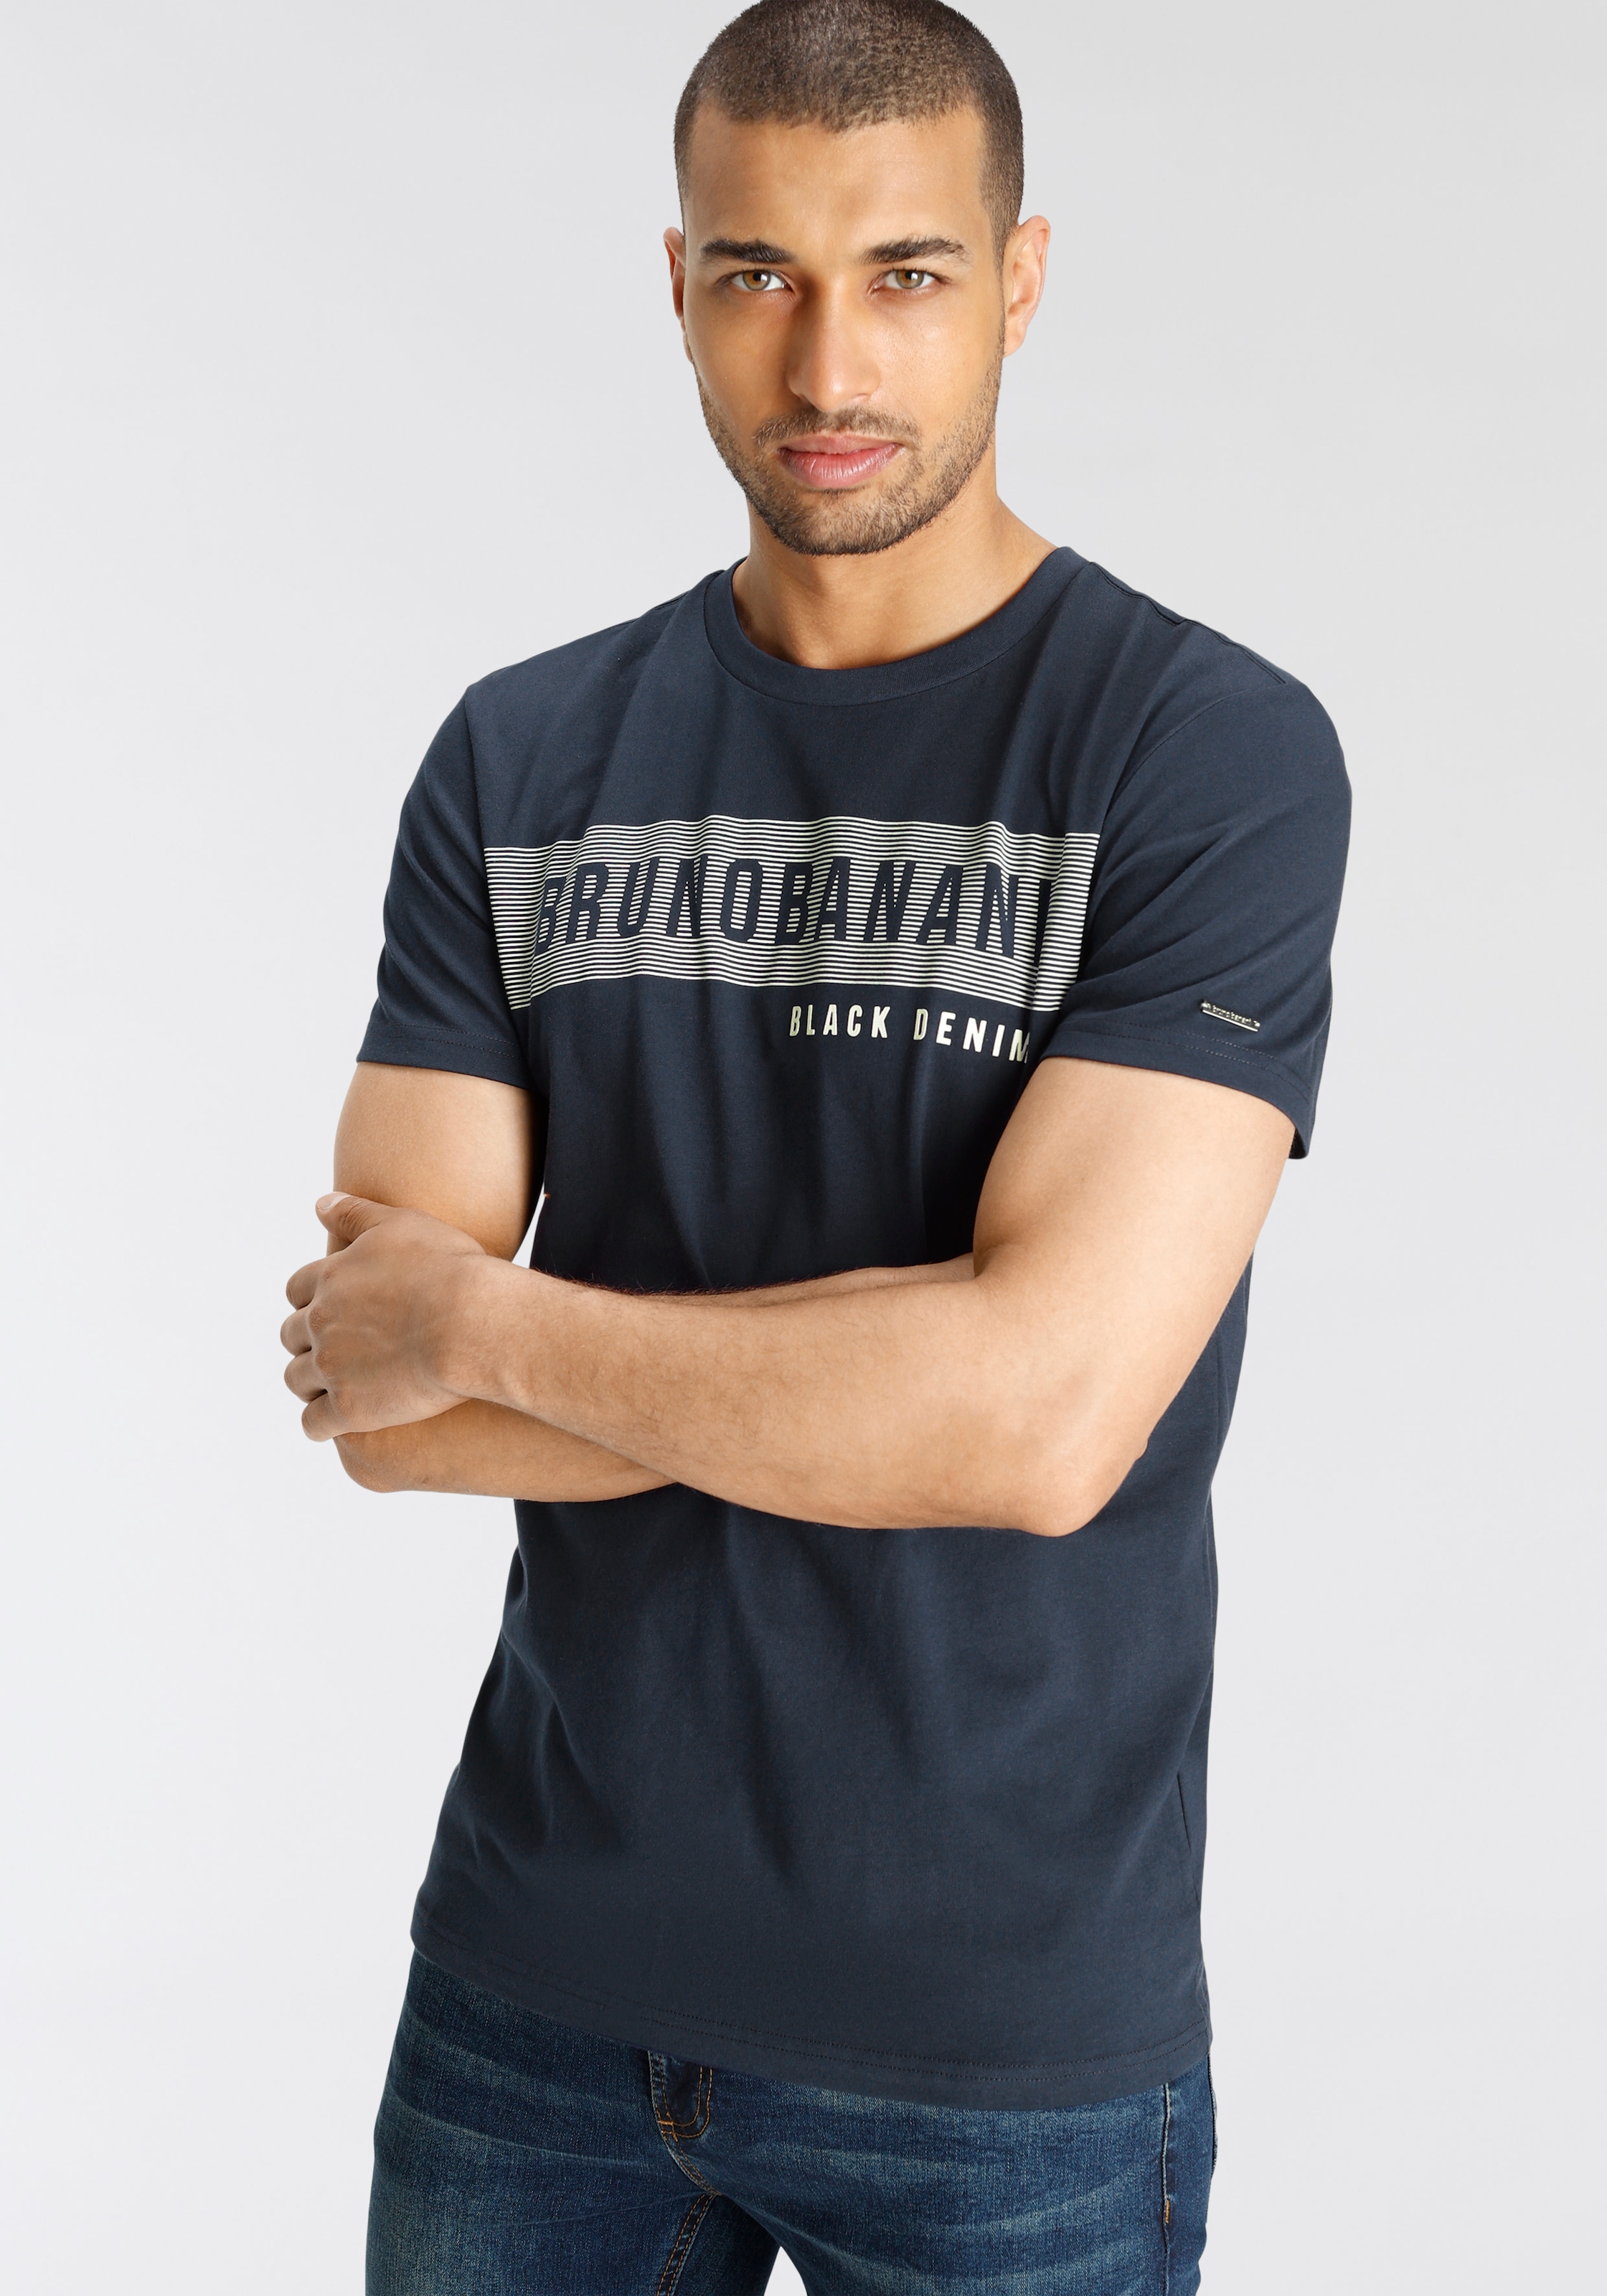 bei mit ♕ Bruno Markenprint T-Shirt, Banani